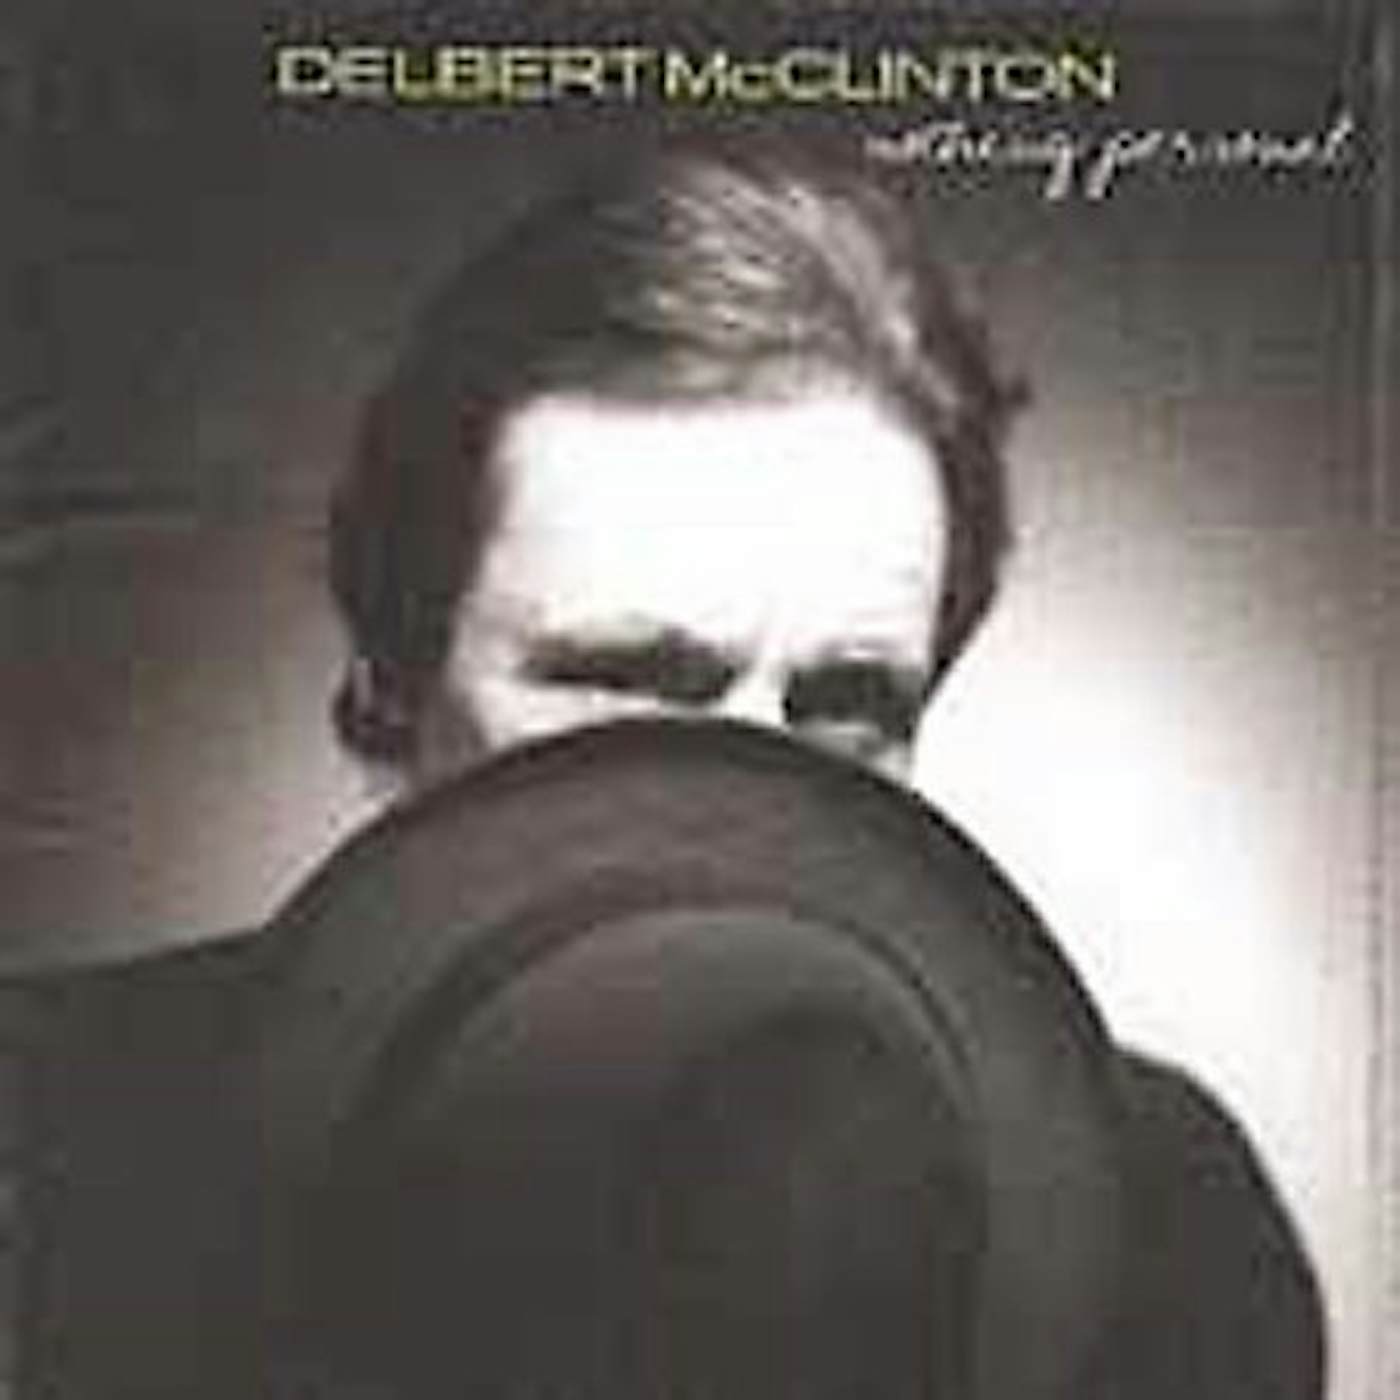 Delbert McClinton NOTHING PERSONAL CD